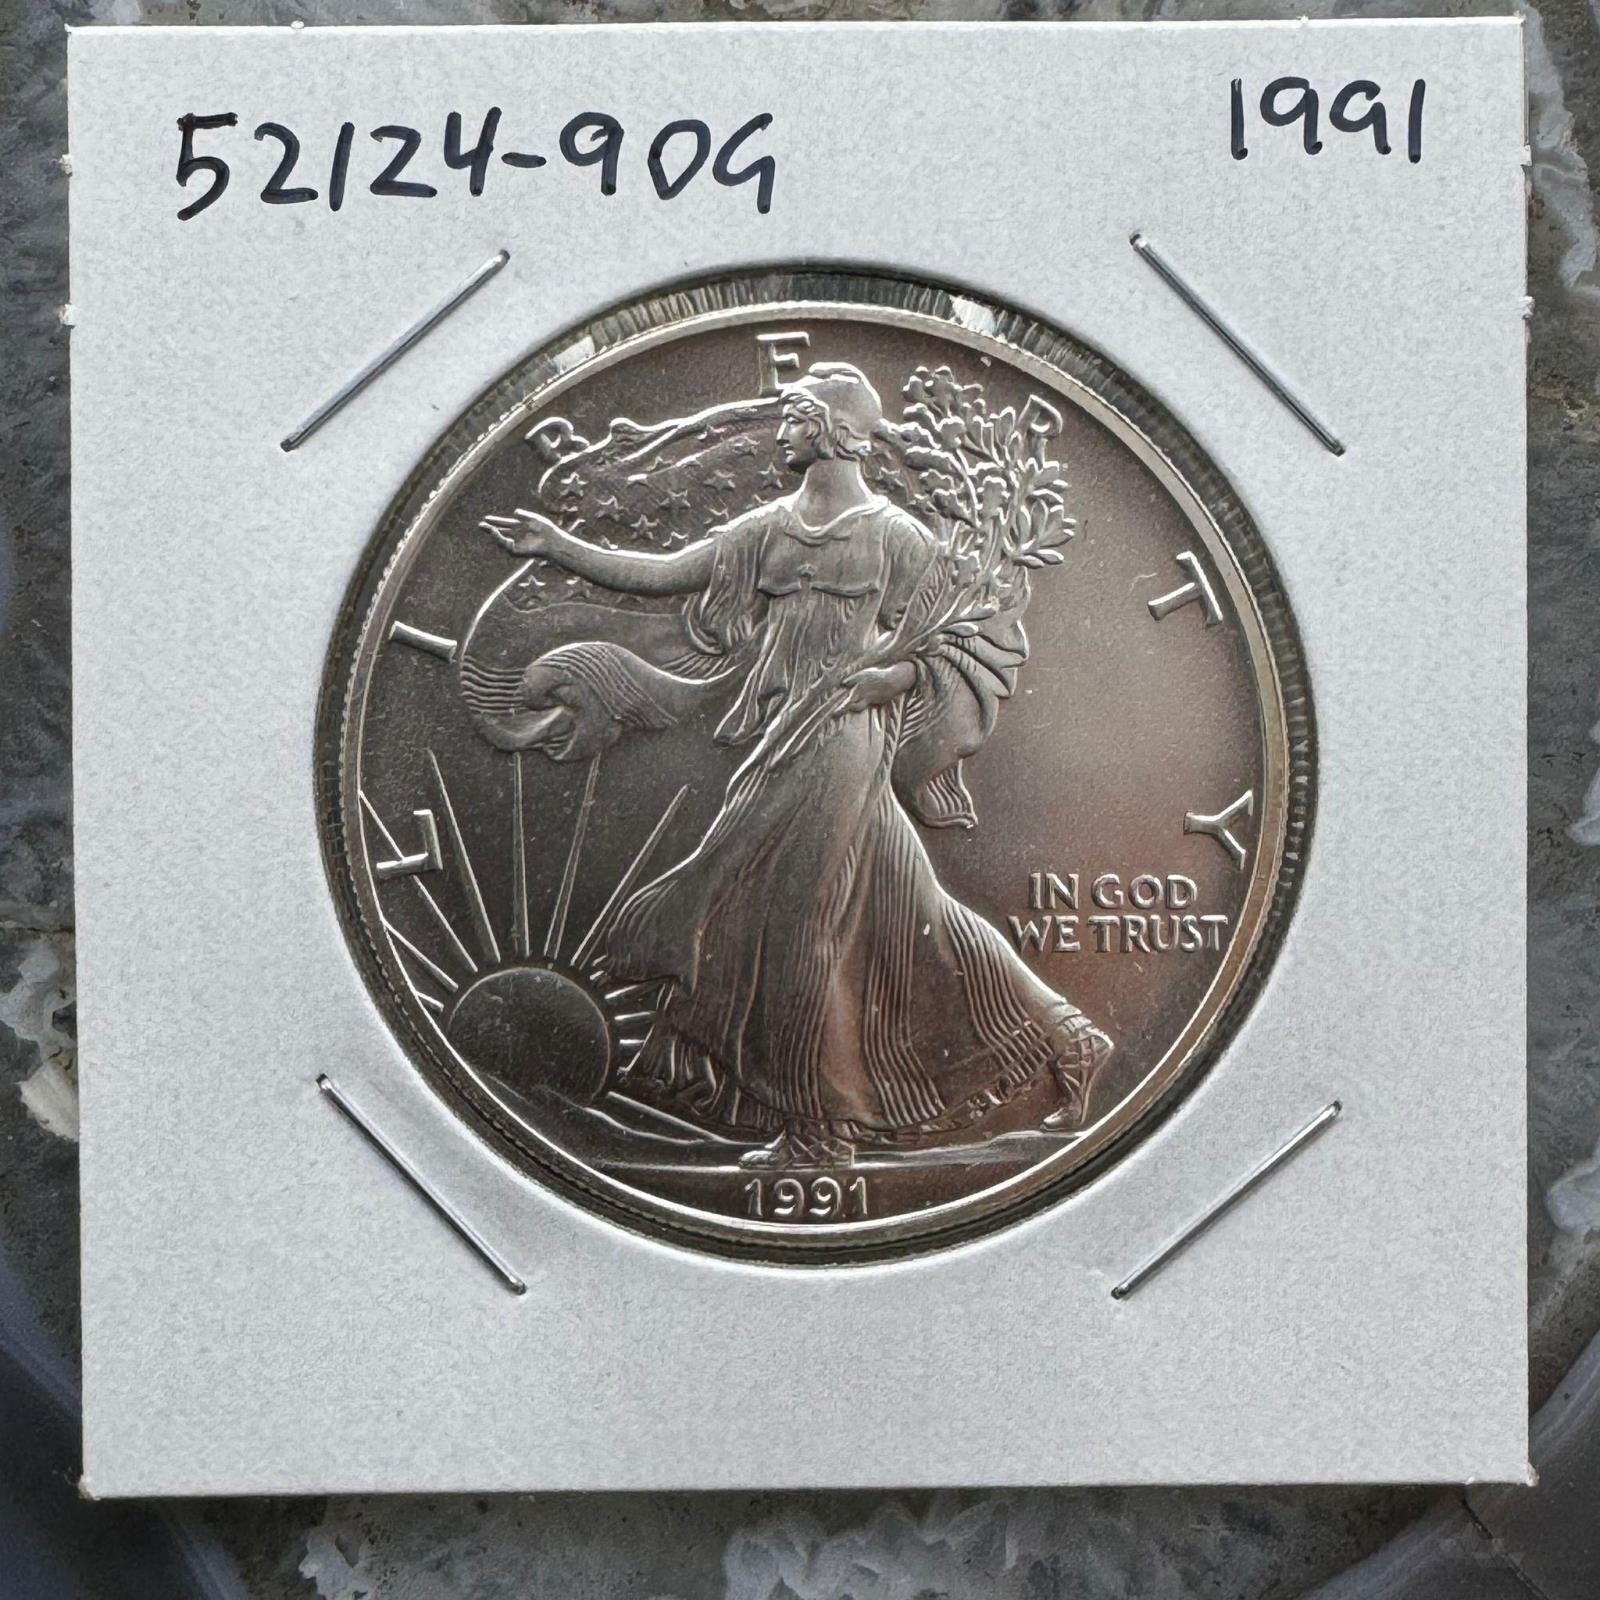 1991 Vintage US 1.0 Troy Ounce American Eagle Fine Silver Round #52124-9OG